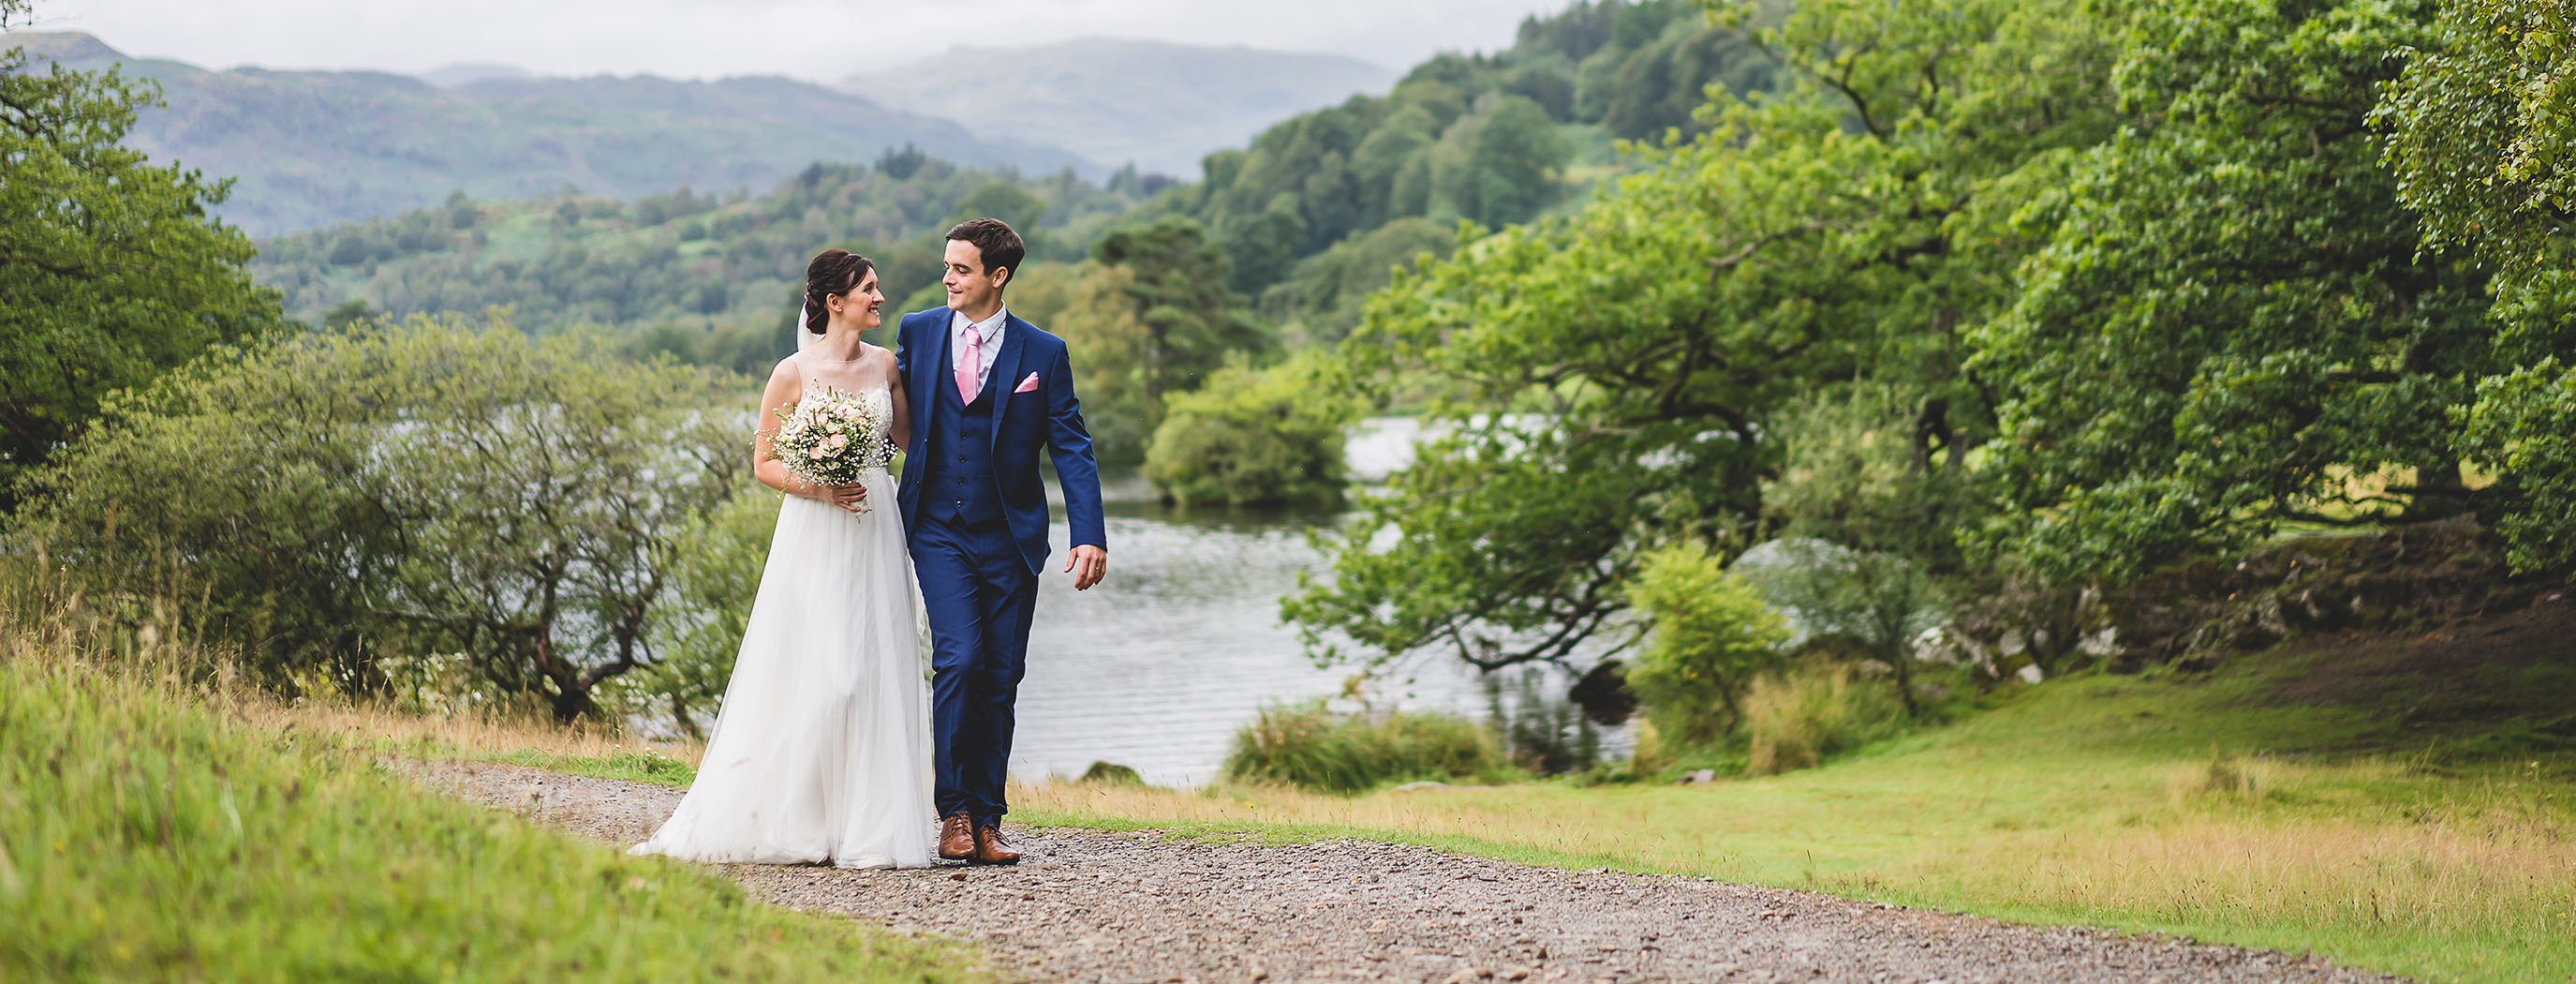 Cote How Lake District wedding venue